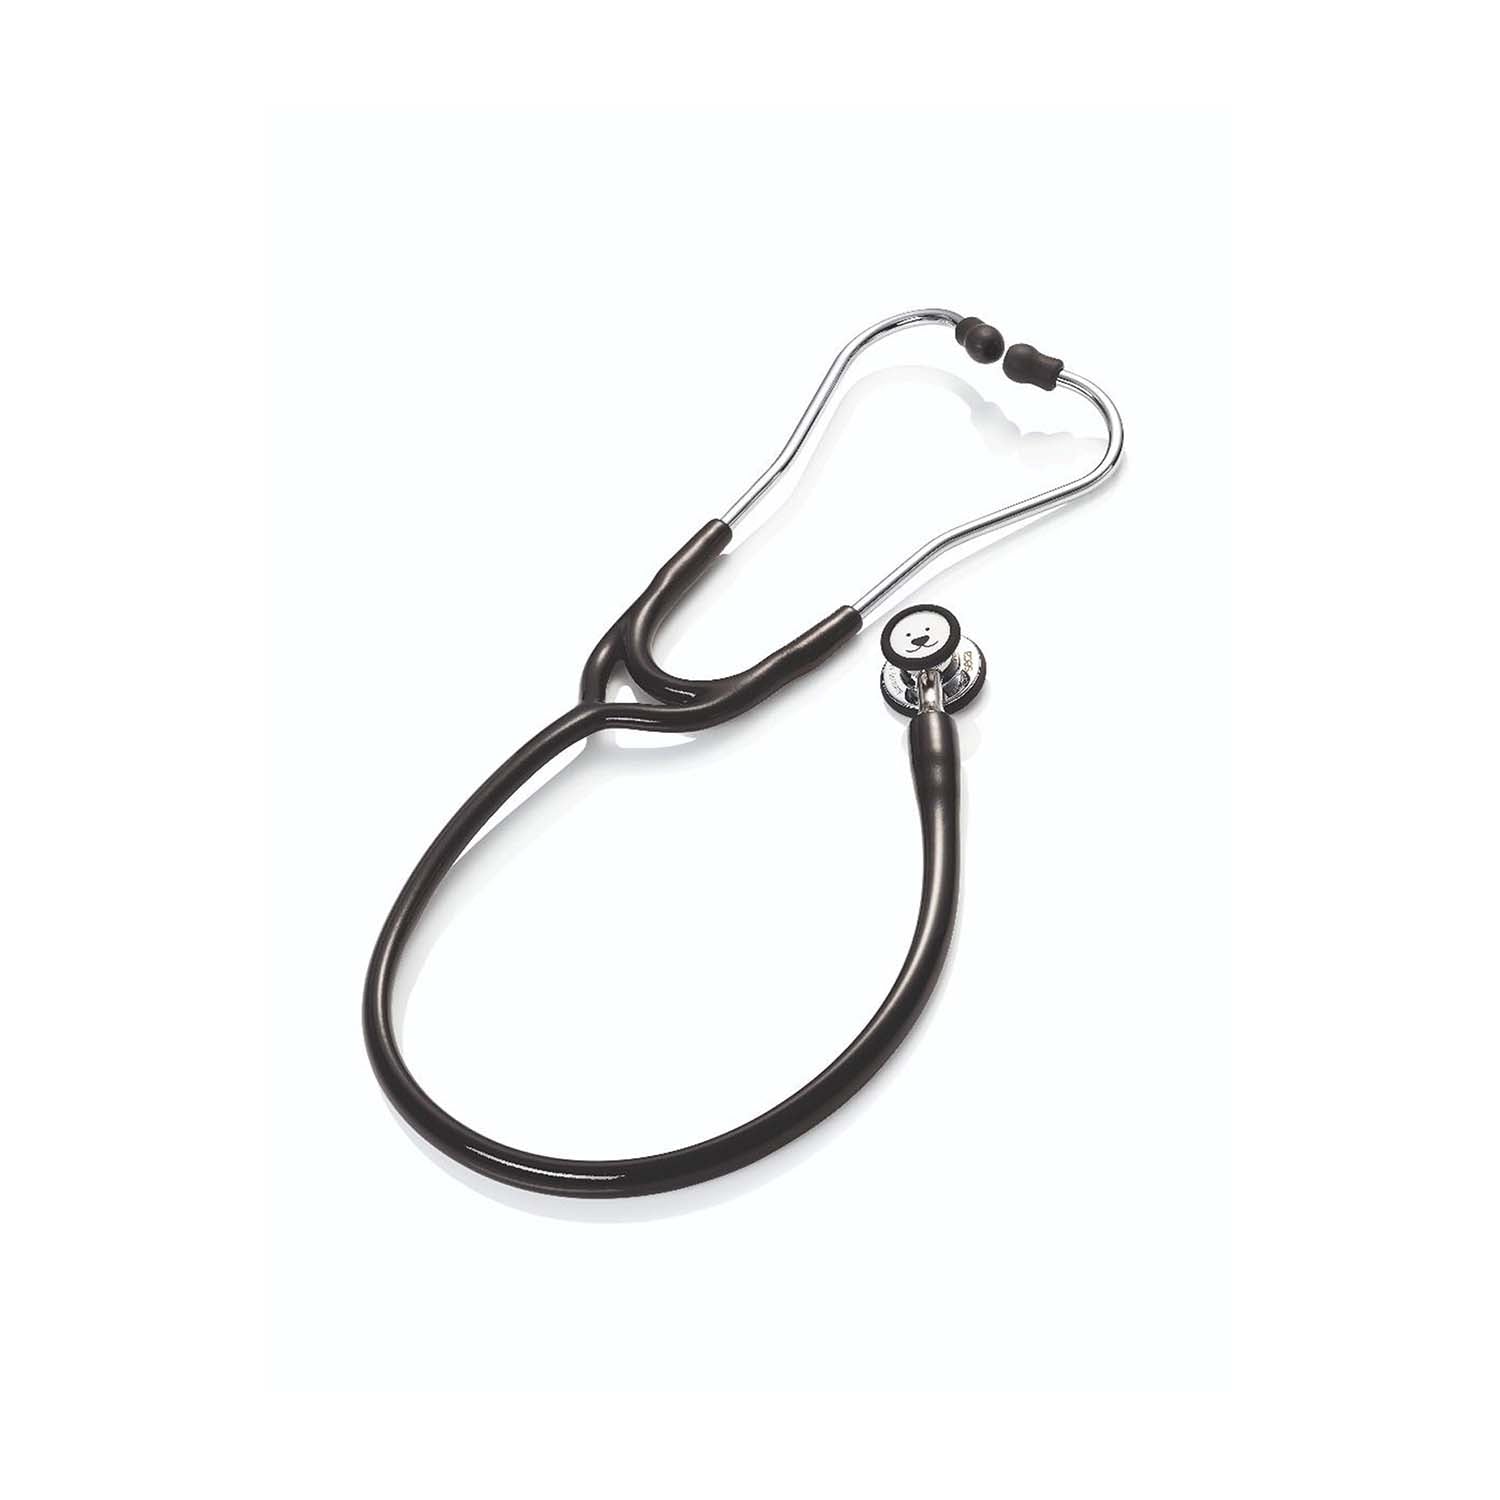 seca S32 Stethoscope (1)